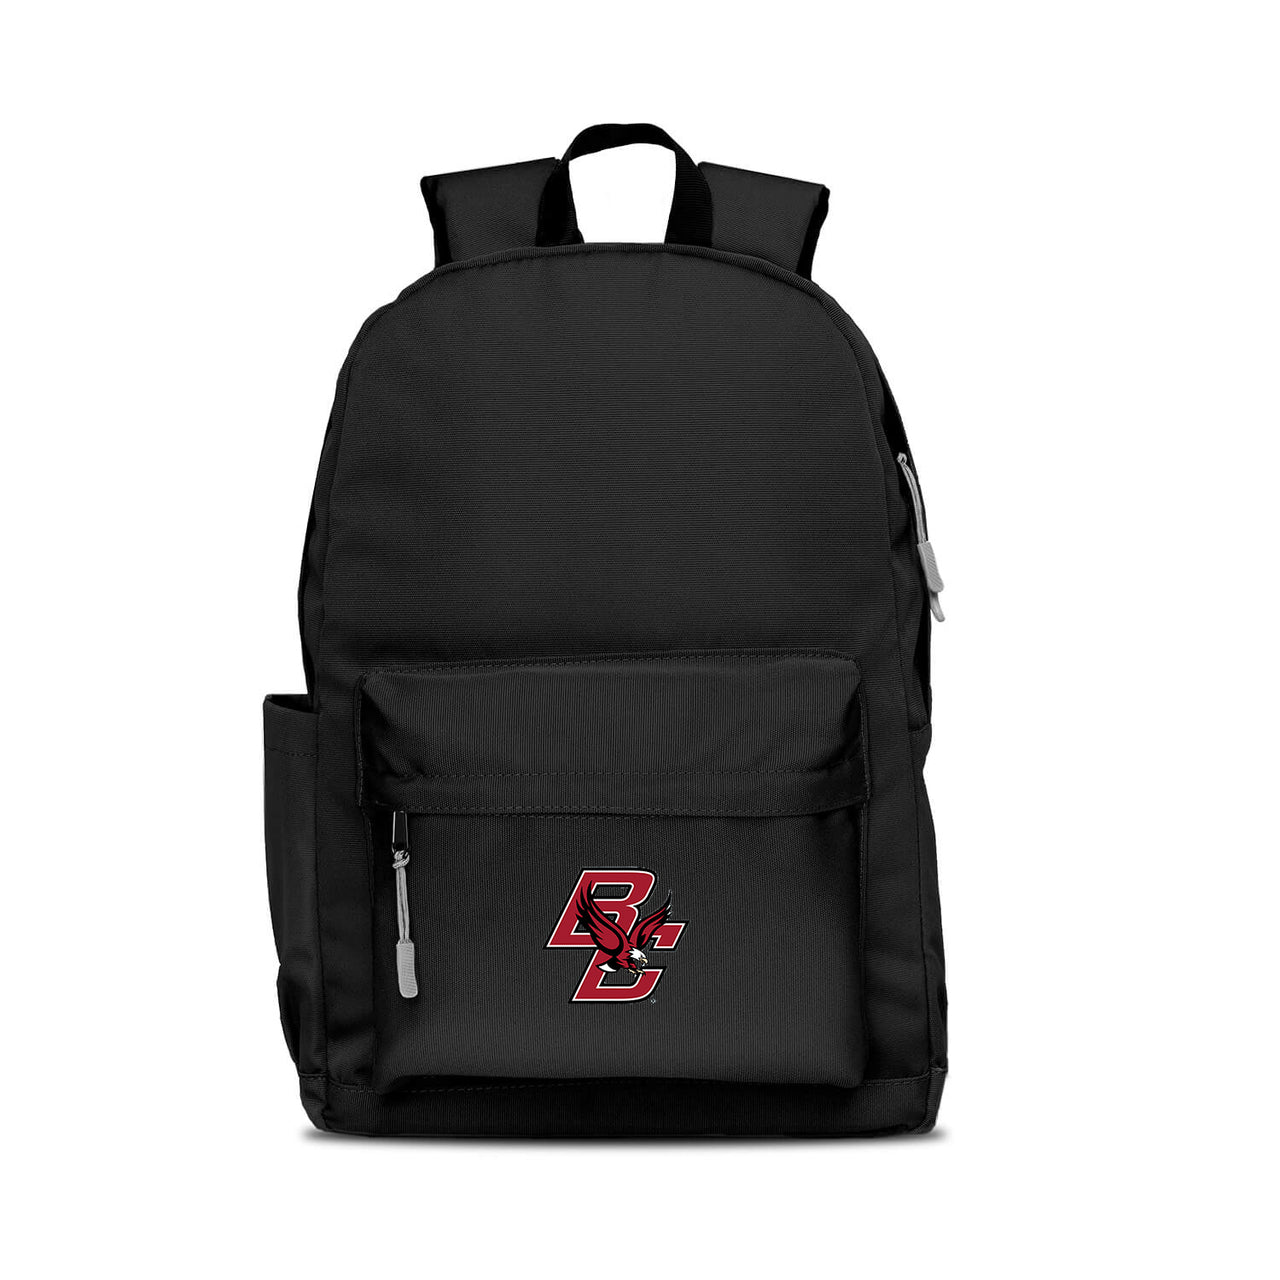 Boston College Eagles Campus Laptop Backpack- Black